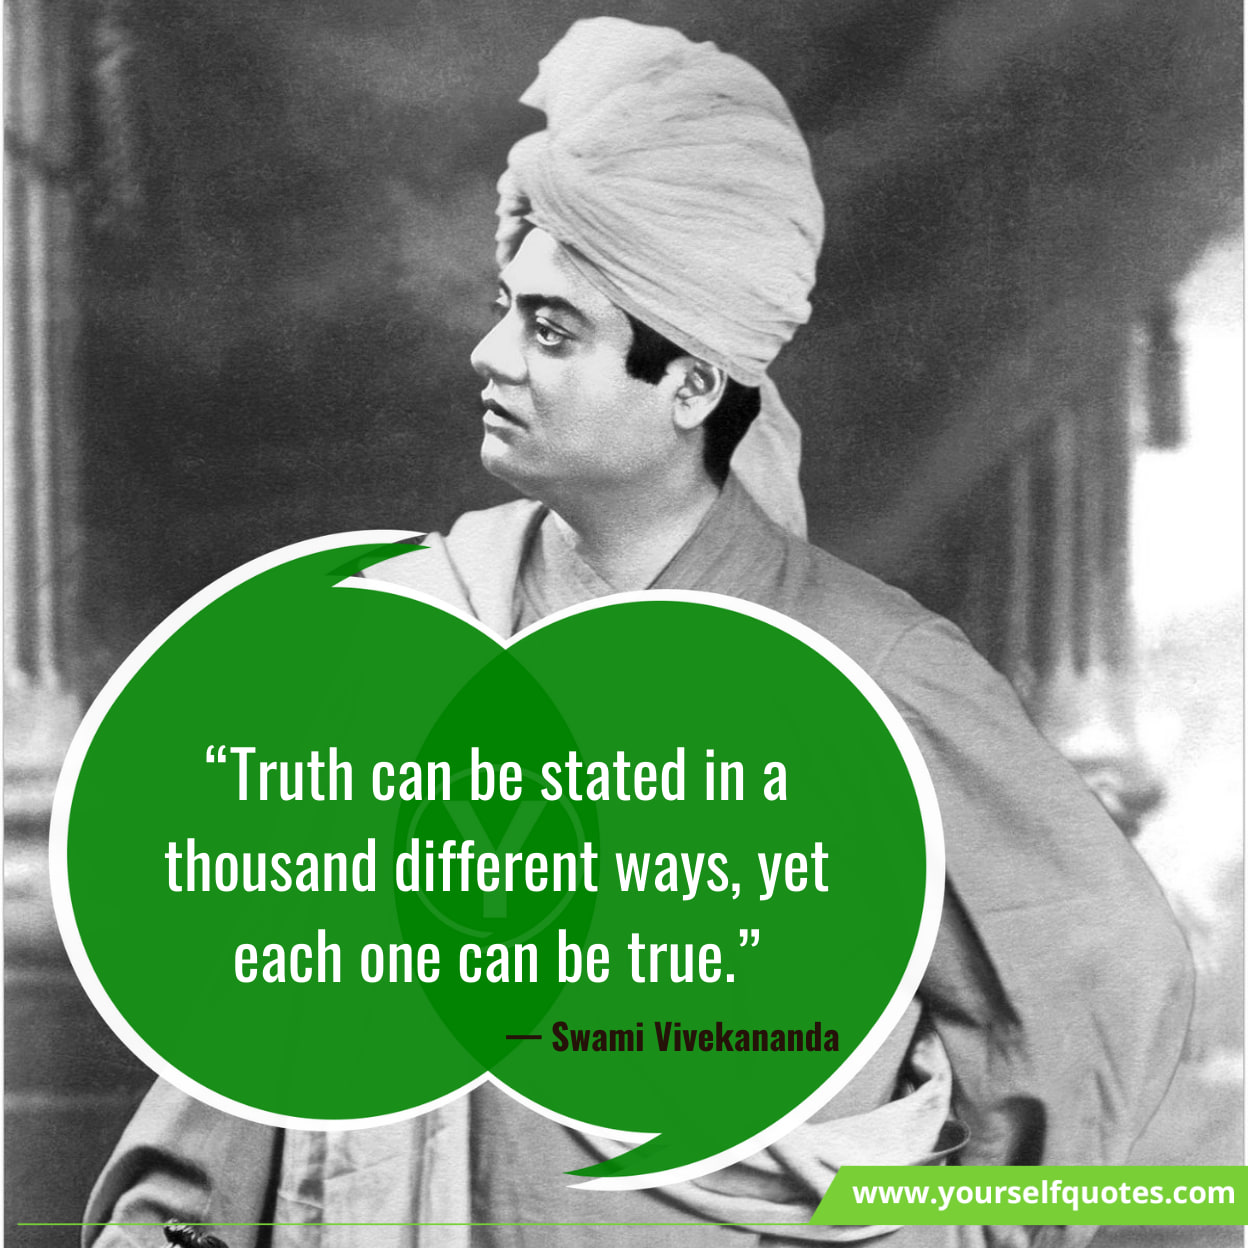 Swami Vivekananda Famous Quotes 